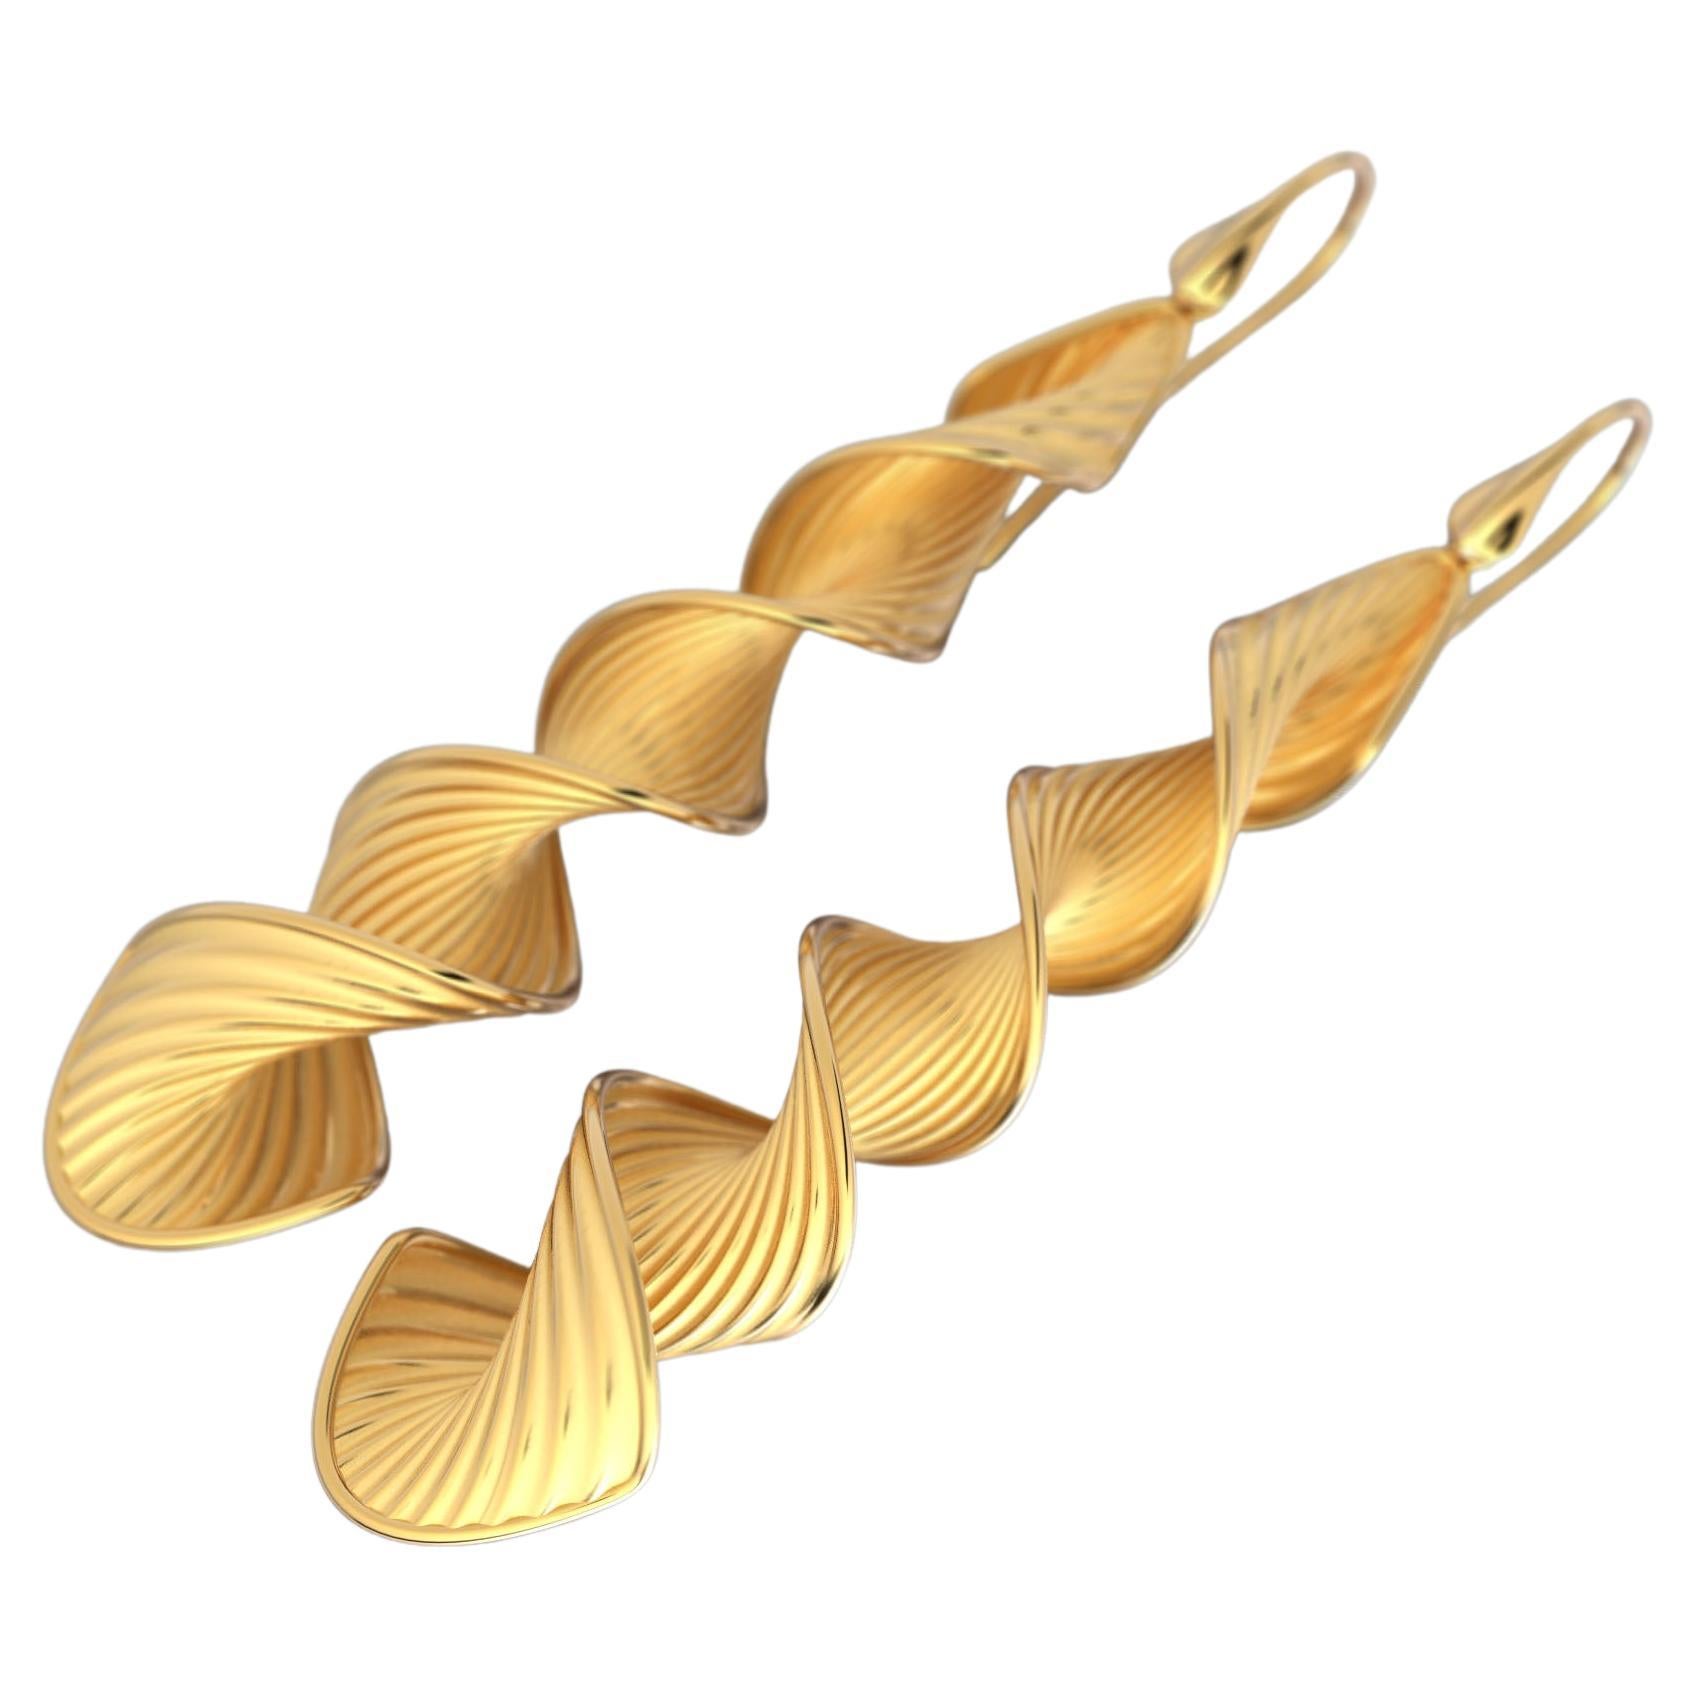 Oltremare Gioielli 14k Gold Earrings, Long Dangle Drop Earrings Made in Italy